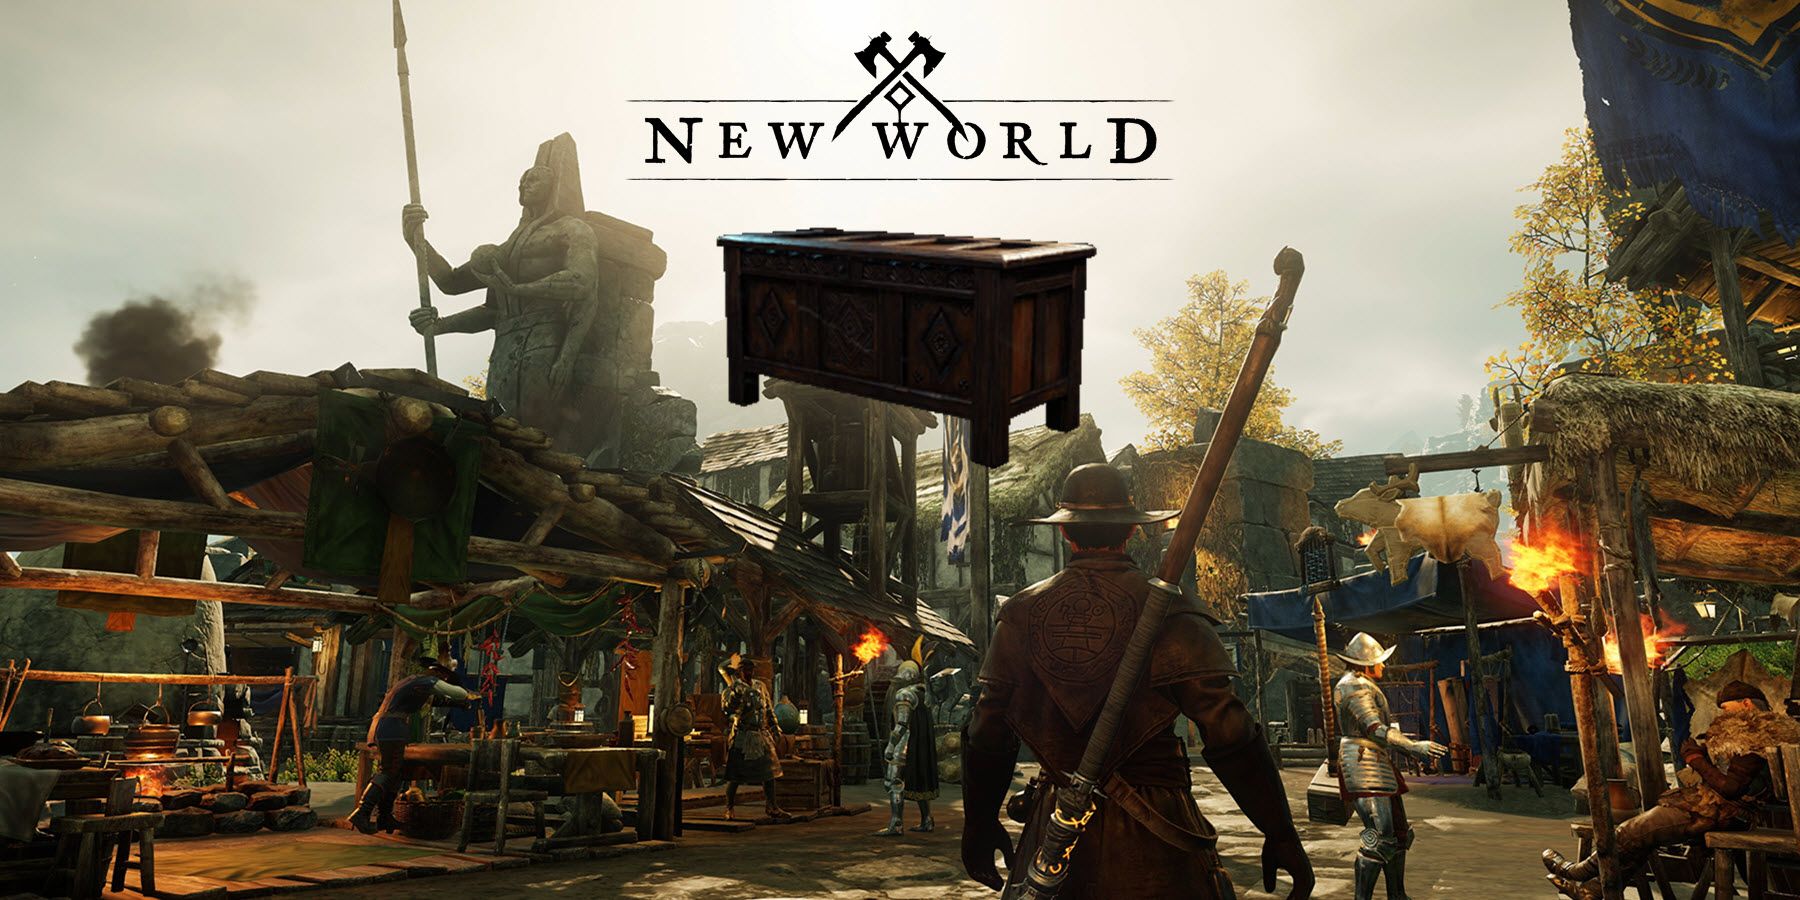 New world server. New World (игра). Аукцион New World. Игра New World 1504. New World русский сервер.